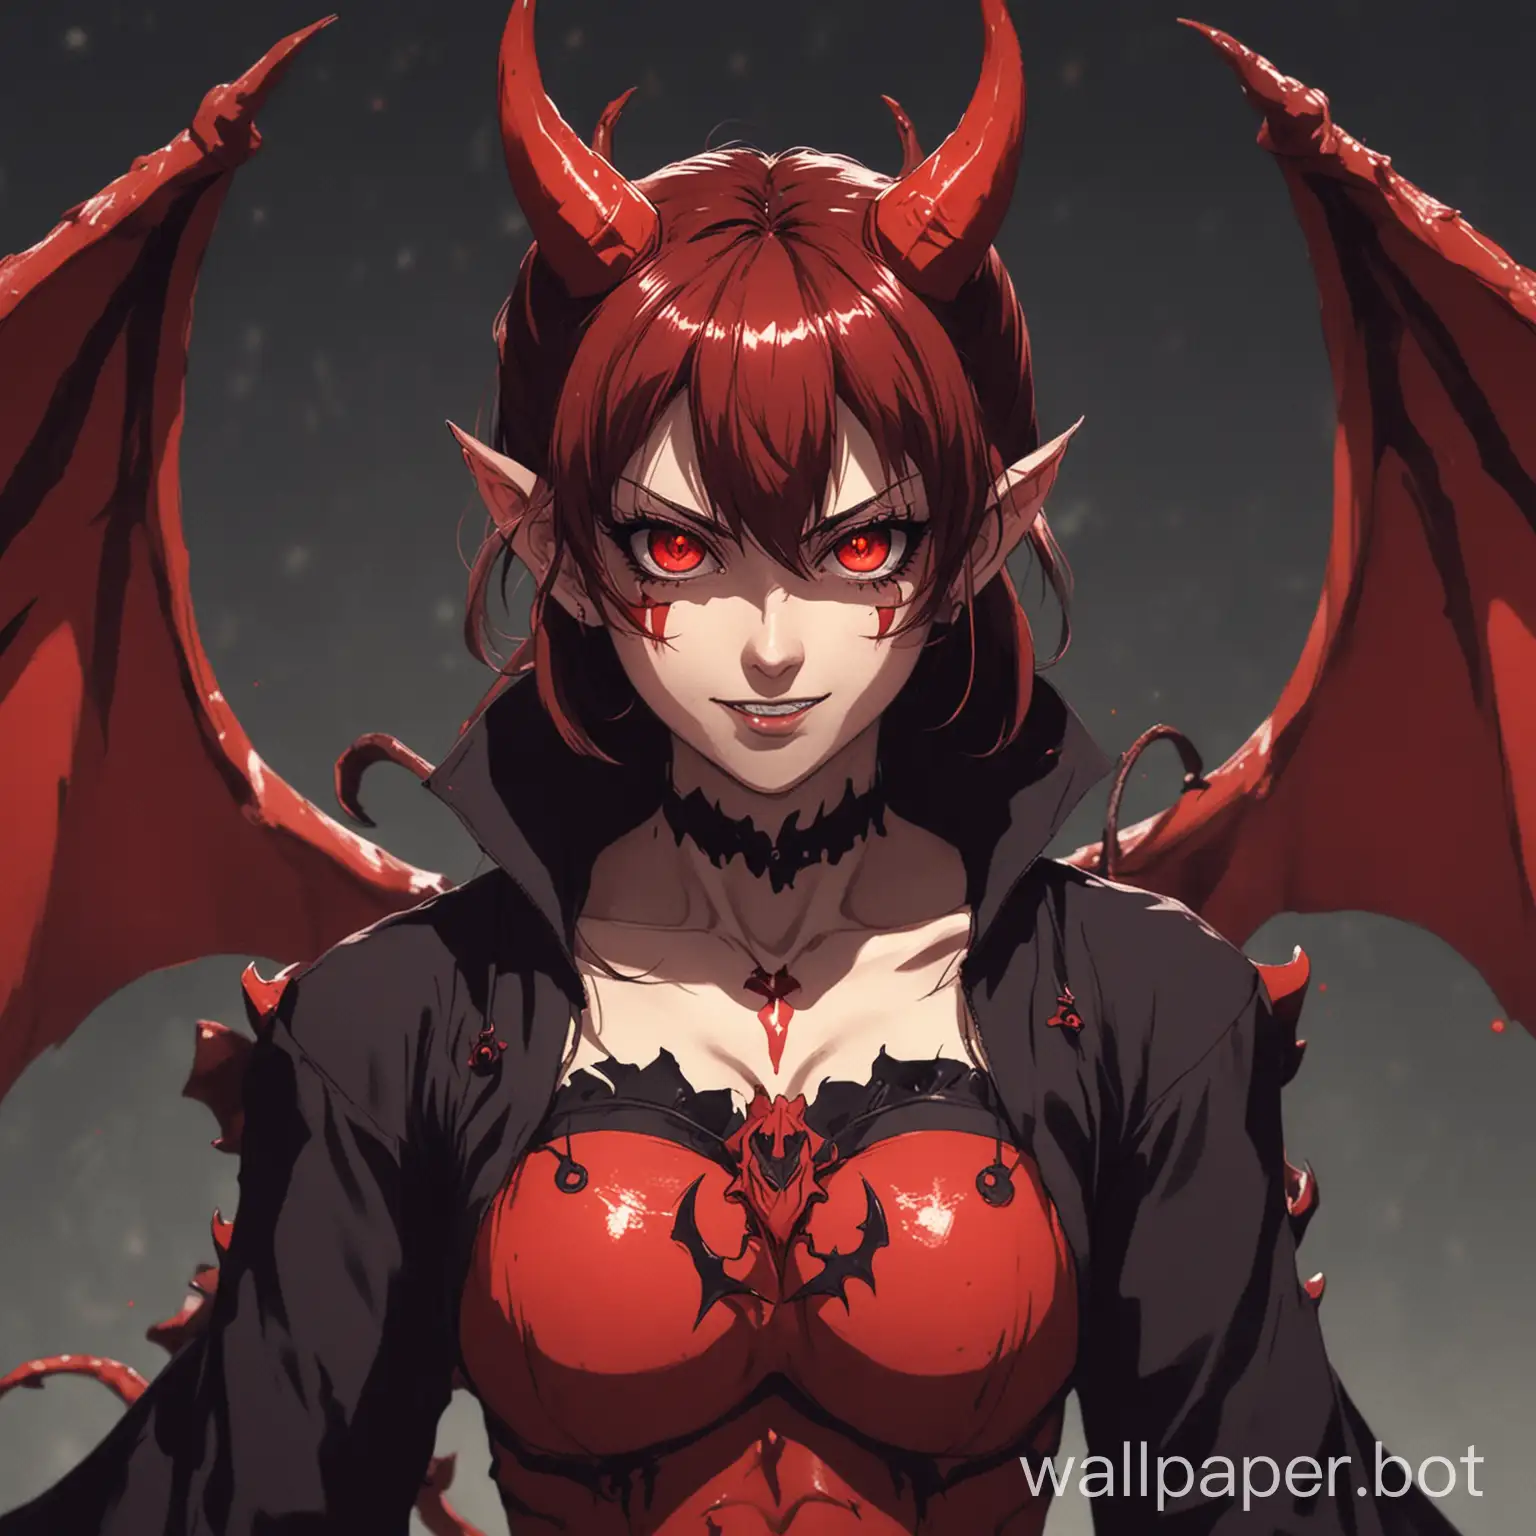 Fiery-Anime-Devil-with-Glowing-Eyes